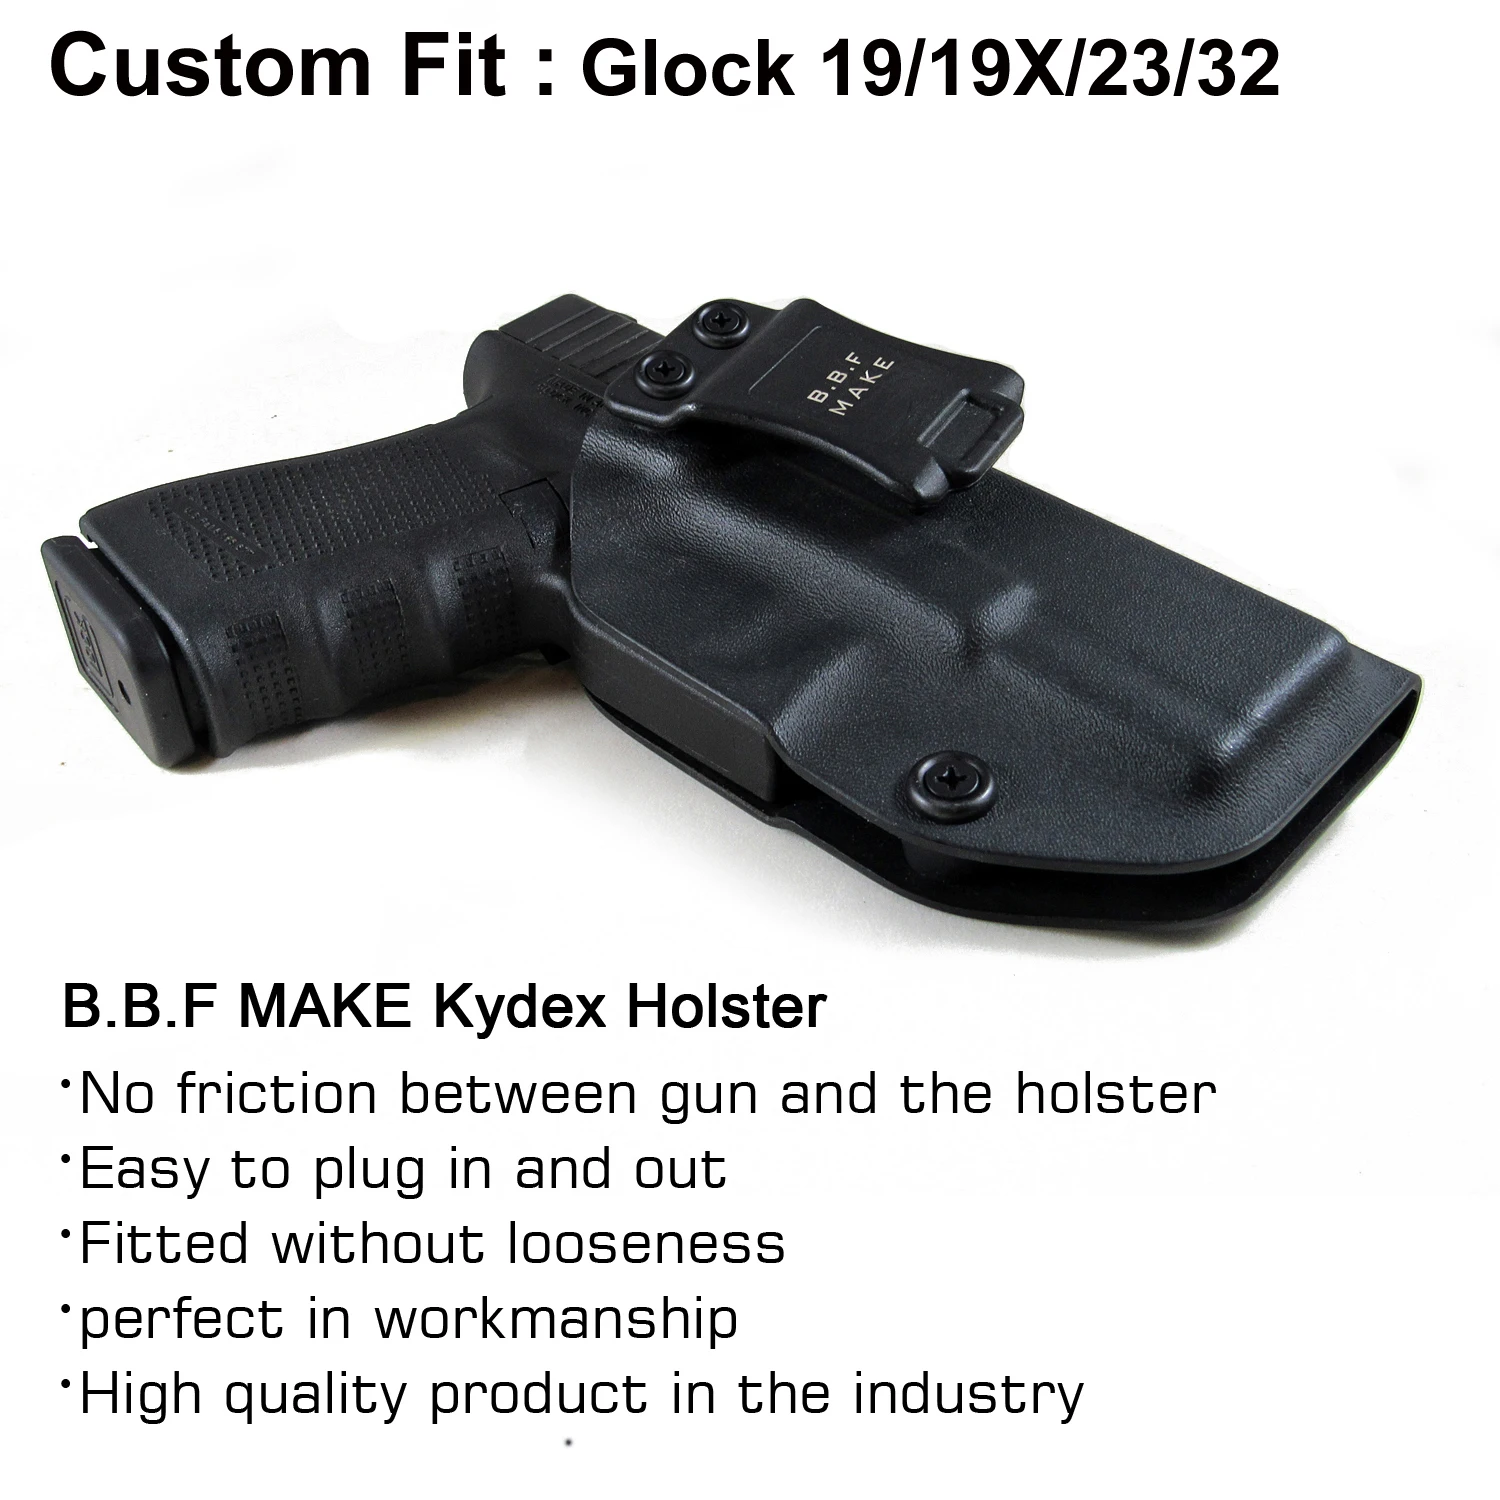 KYDEX IWB Holster Glock 19 19X 23 25 32 Cz P10 Gun Holsters Waistband Carry Concealed Holster  Pistol Case Guns Accessories